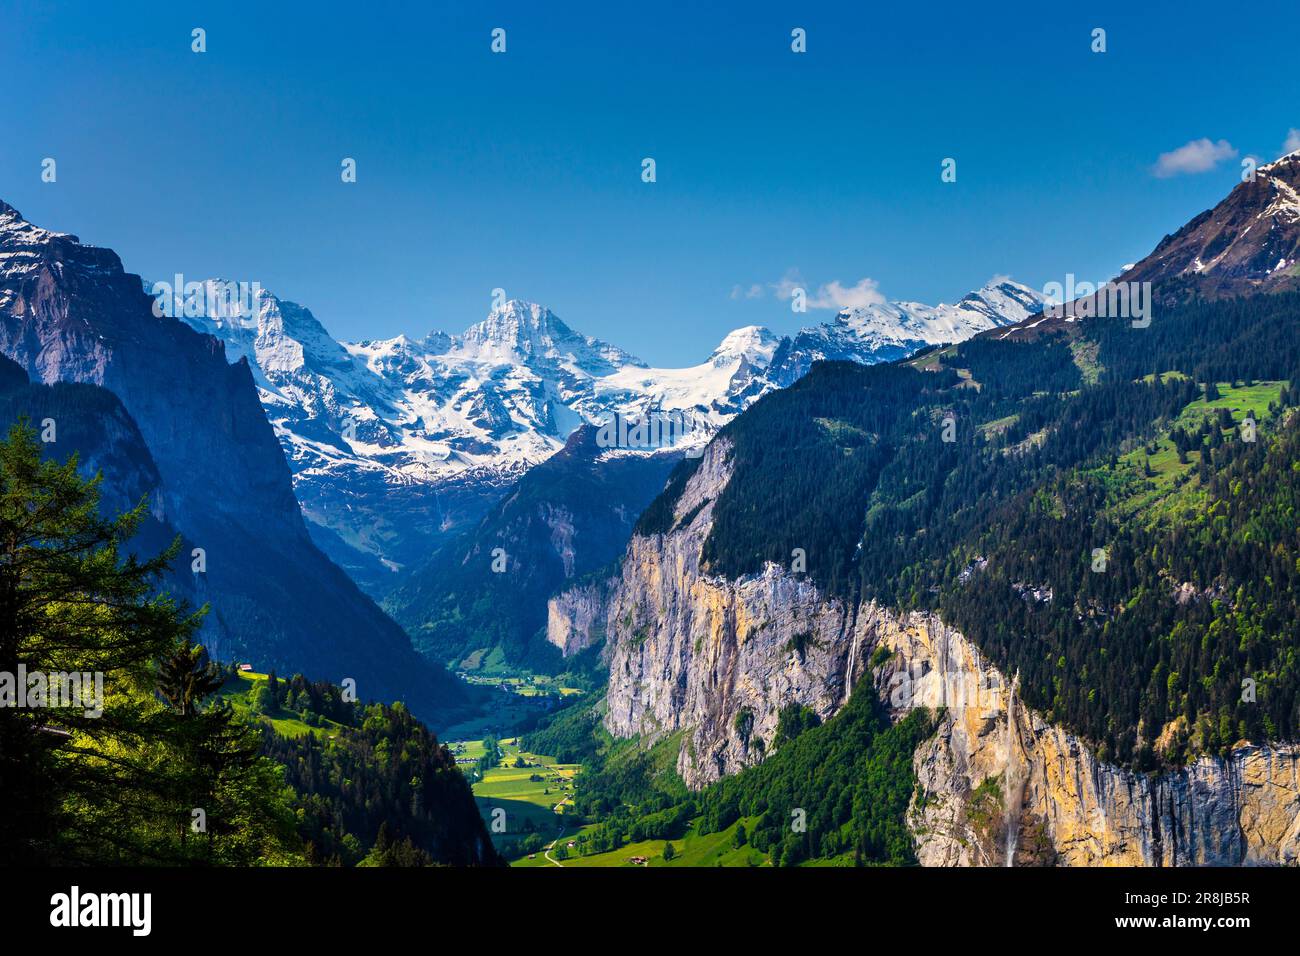 Lauterbrunnen valley with the Staubbach Waterfall and snowy peaks of the Swiss Alps (Breithorn), Lauterbrunnen, Switzerland Stock Photo